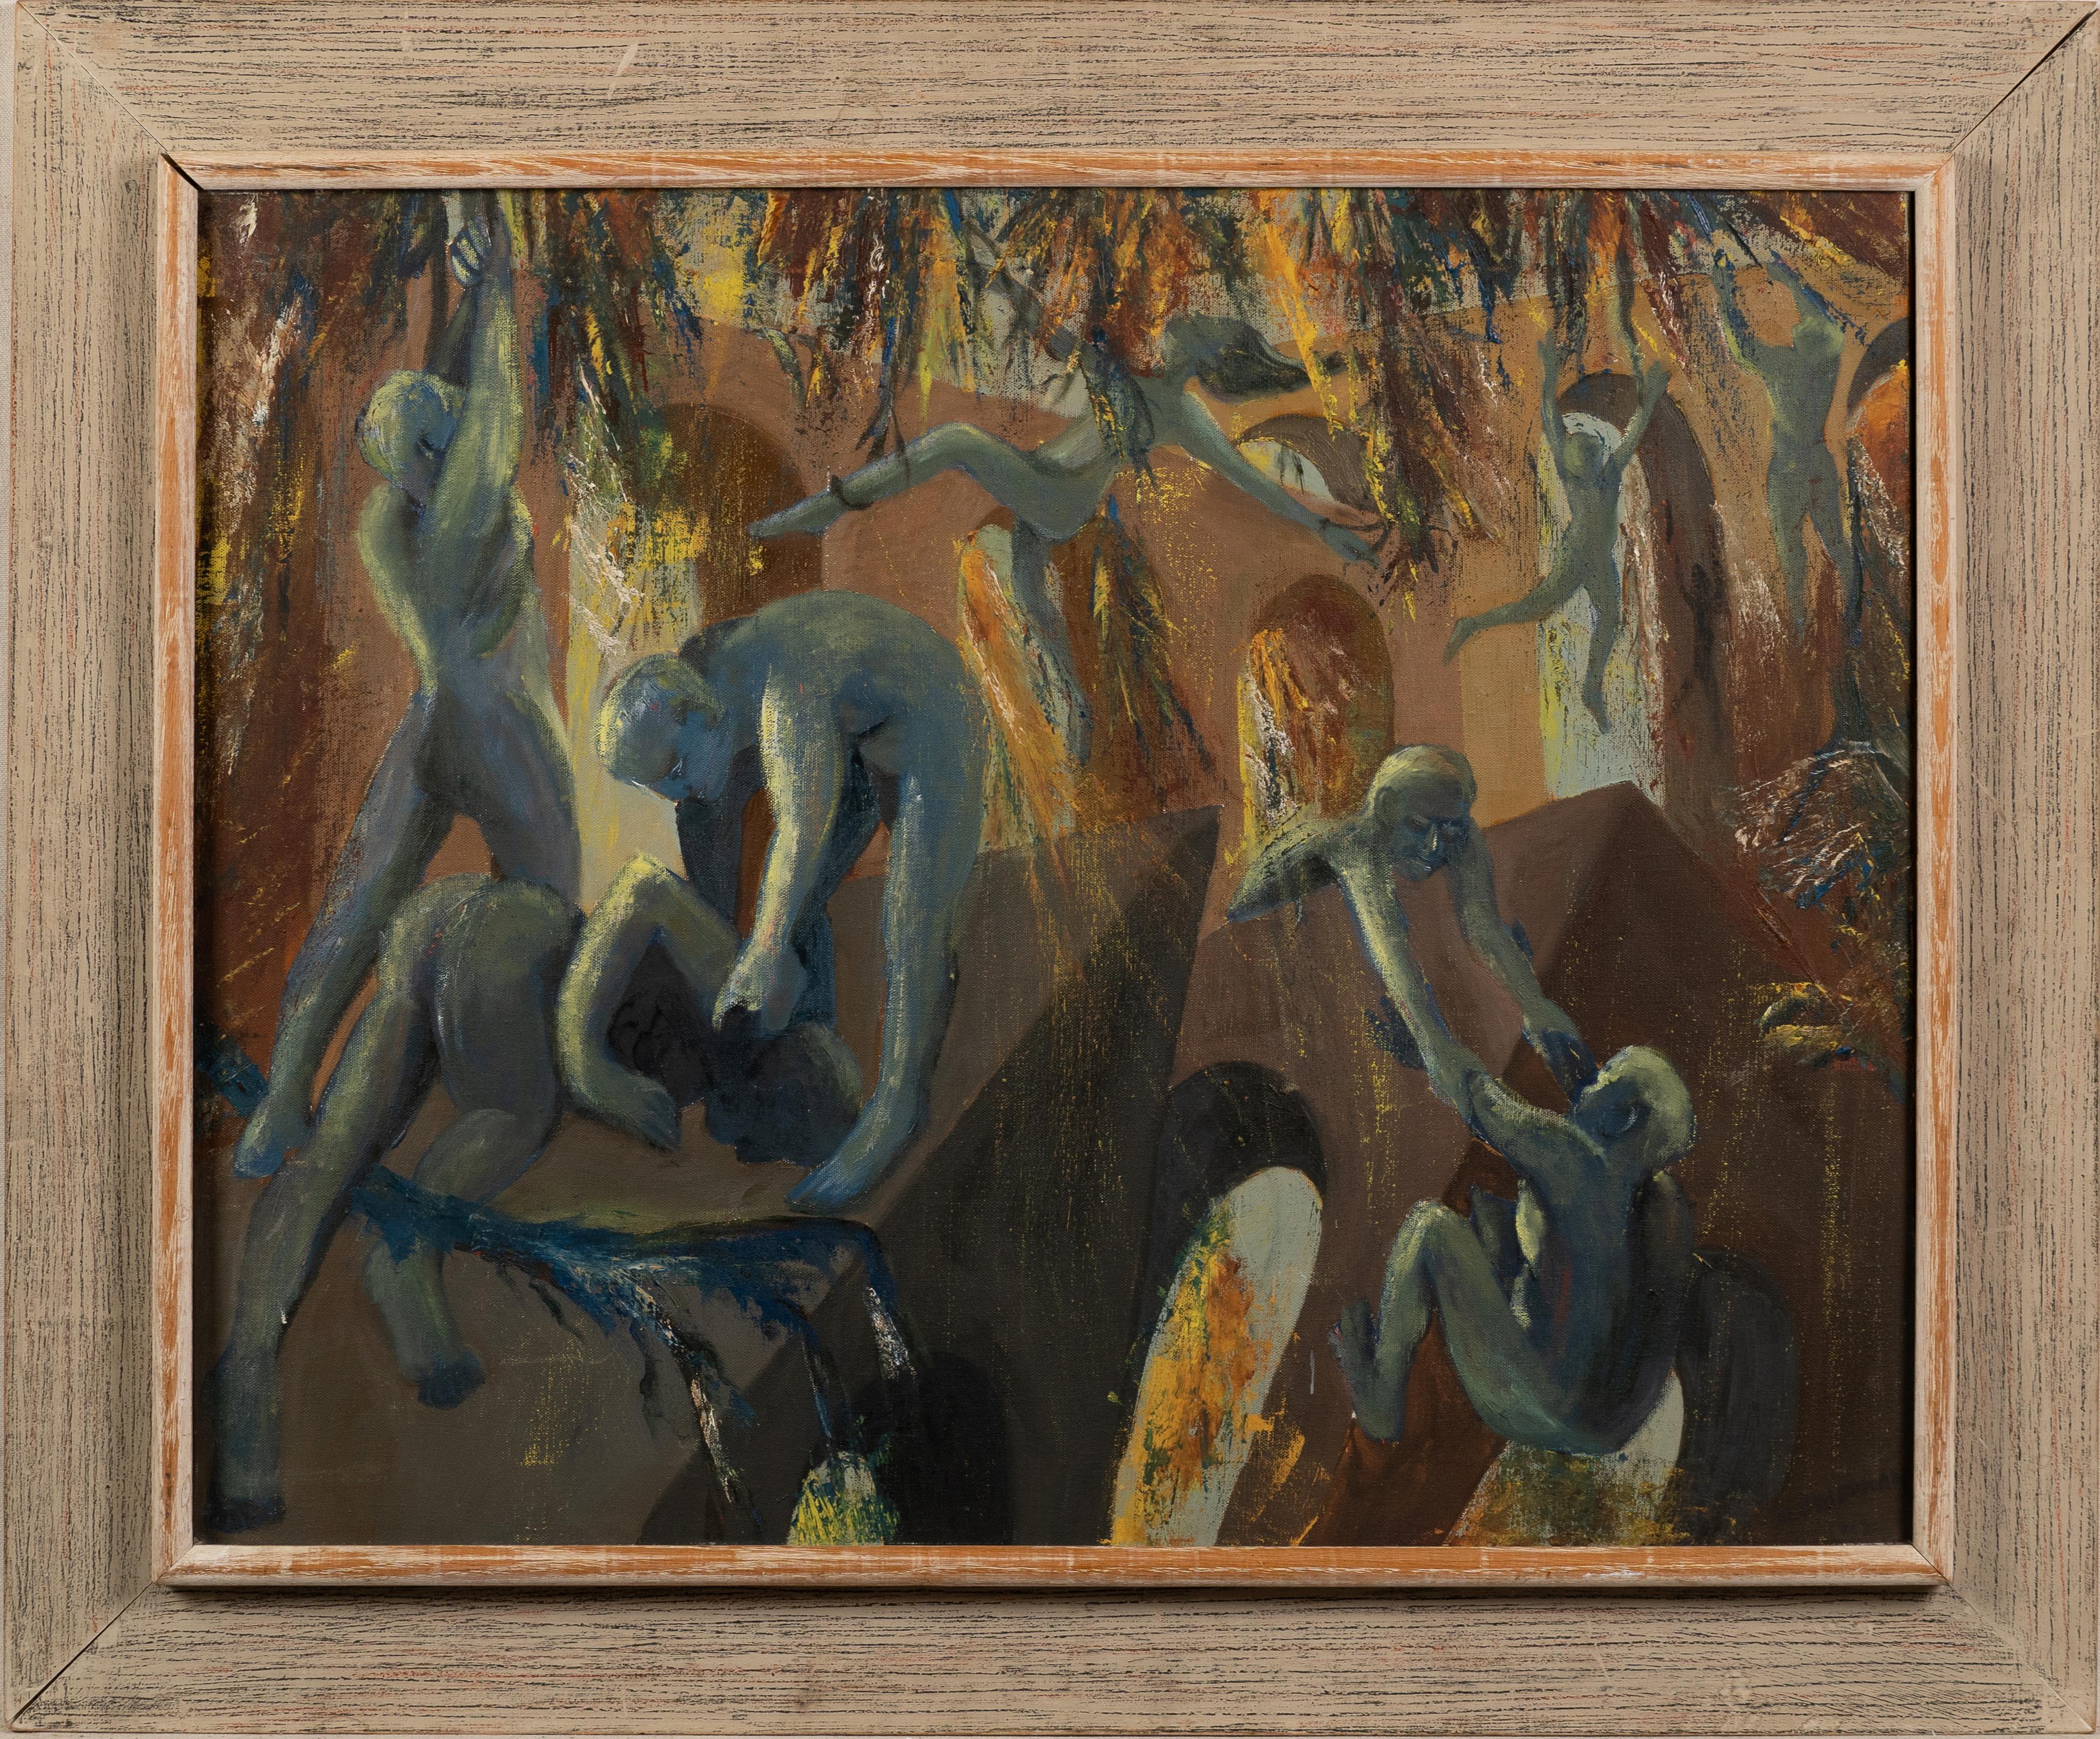 Nude Painting Unknown - Vintage Surreal Signed Nude Figures Encadré Original Modernist Oil Painting